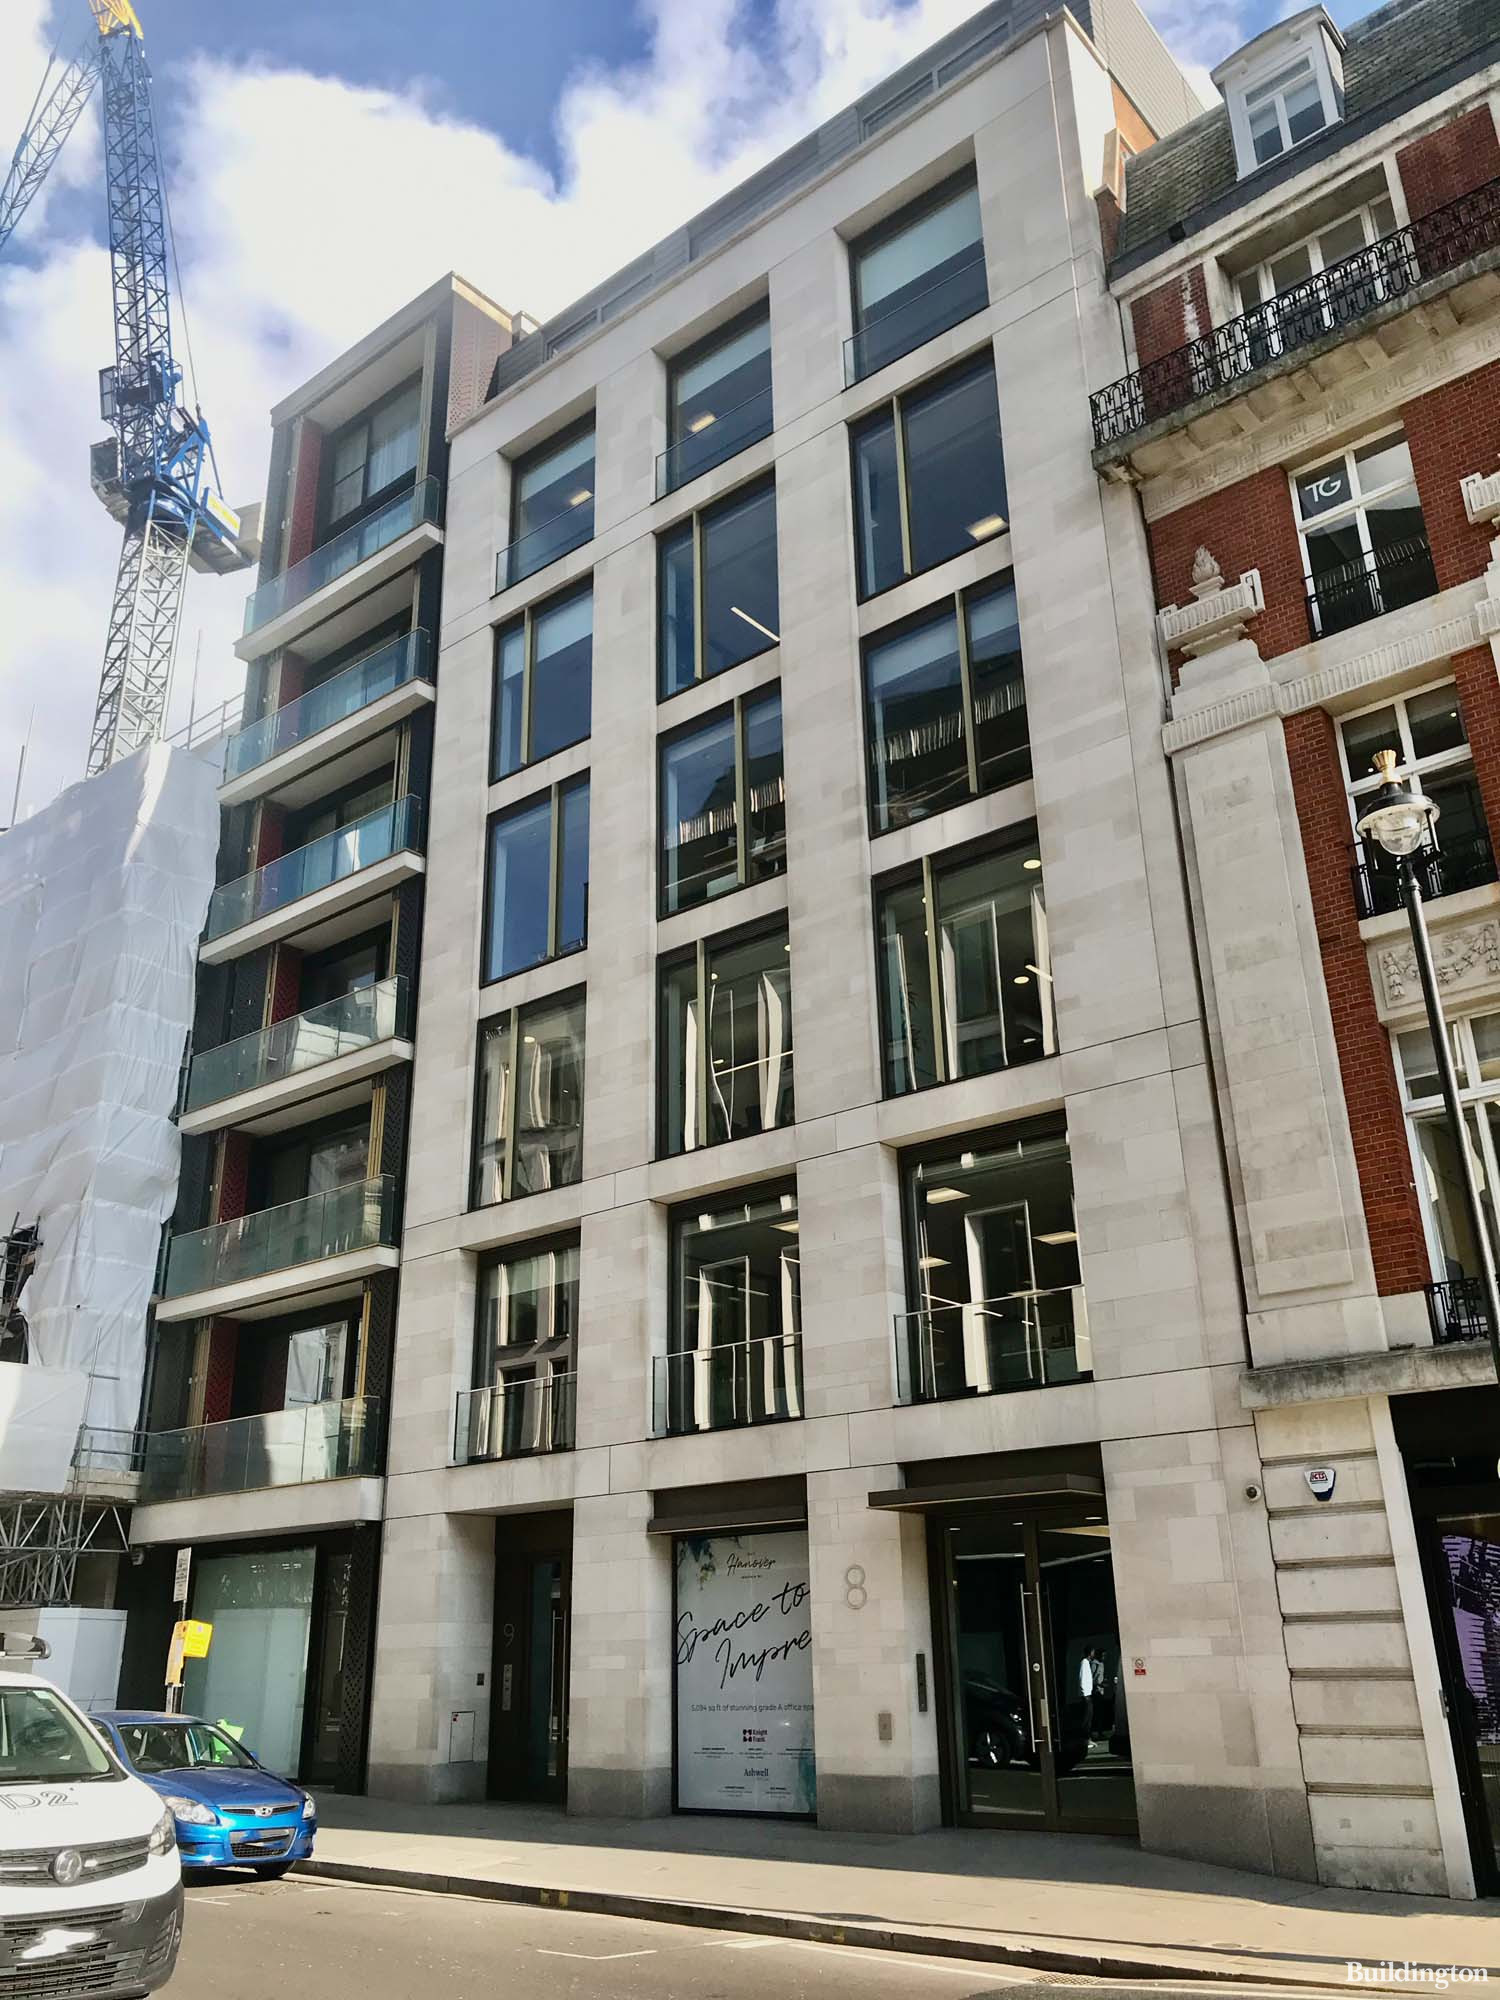 8-10 Hanover Street building in Mayfair, London W1.